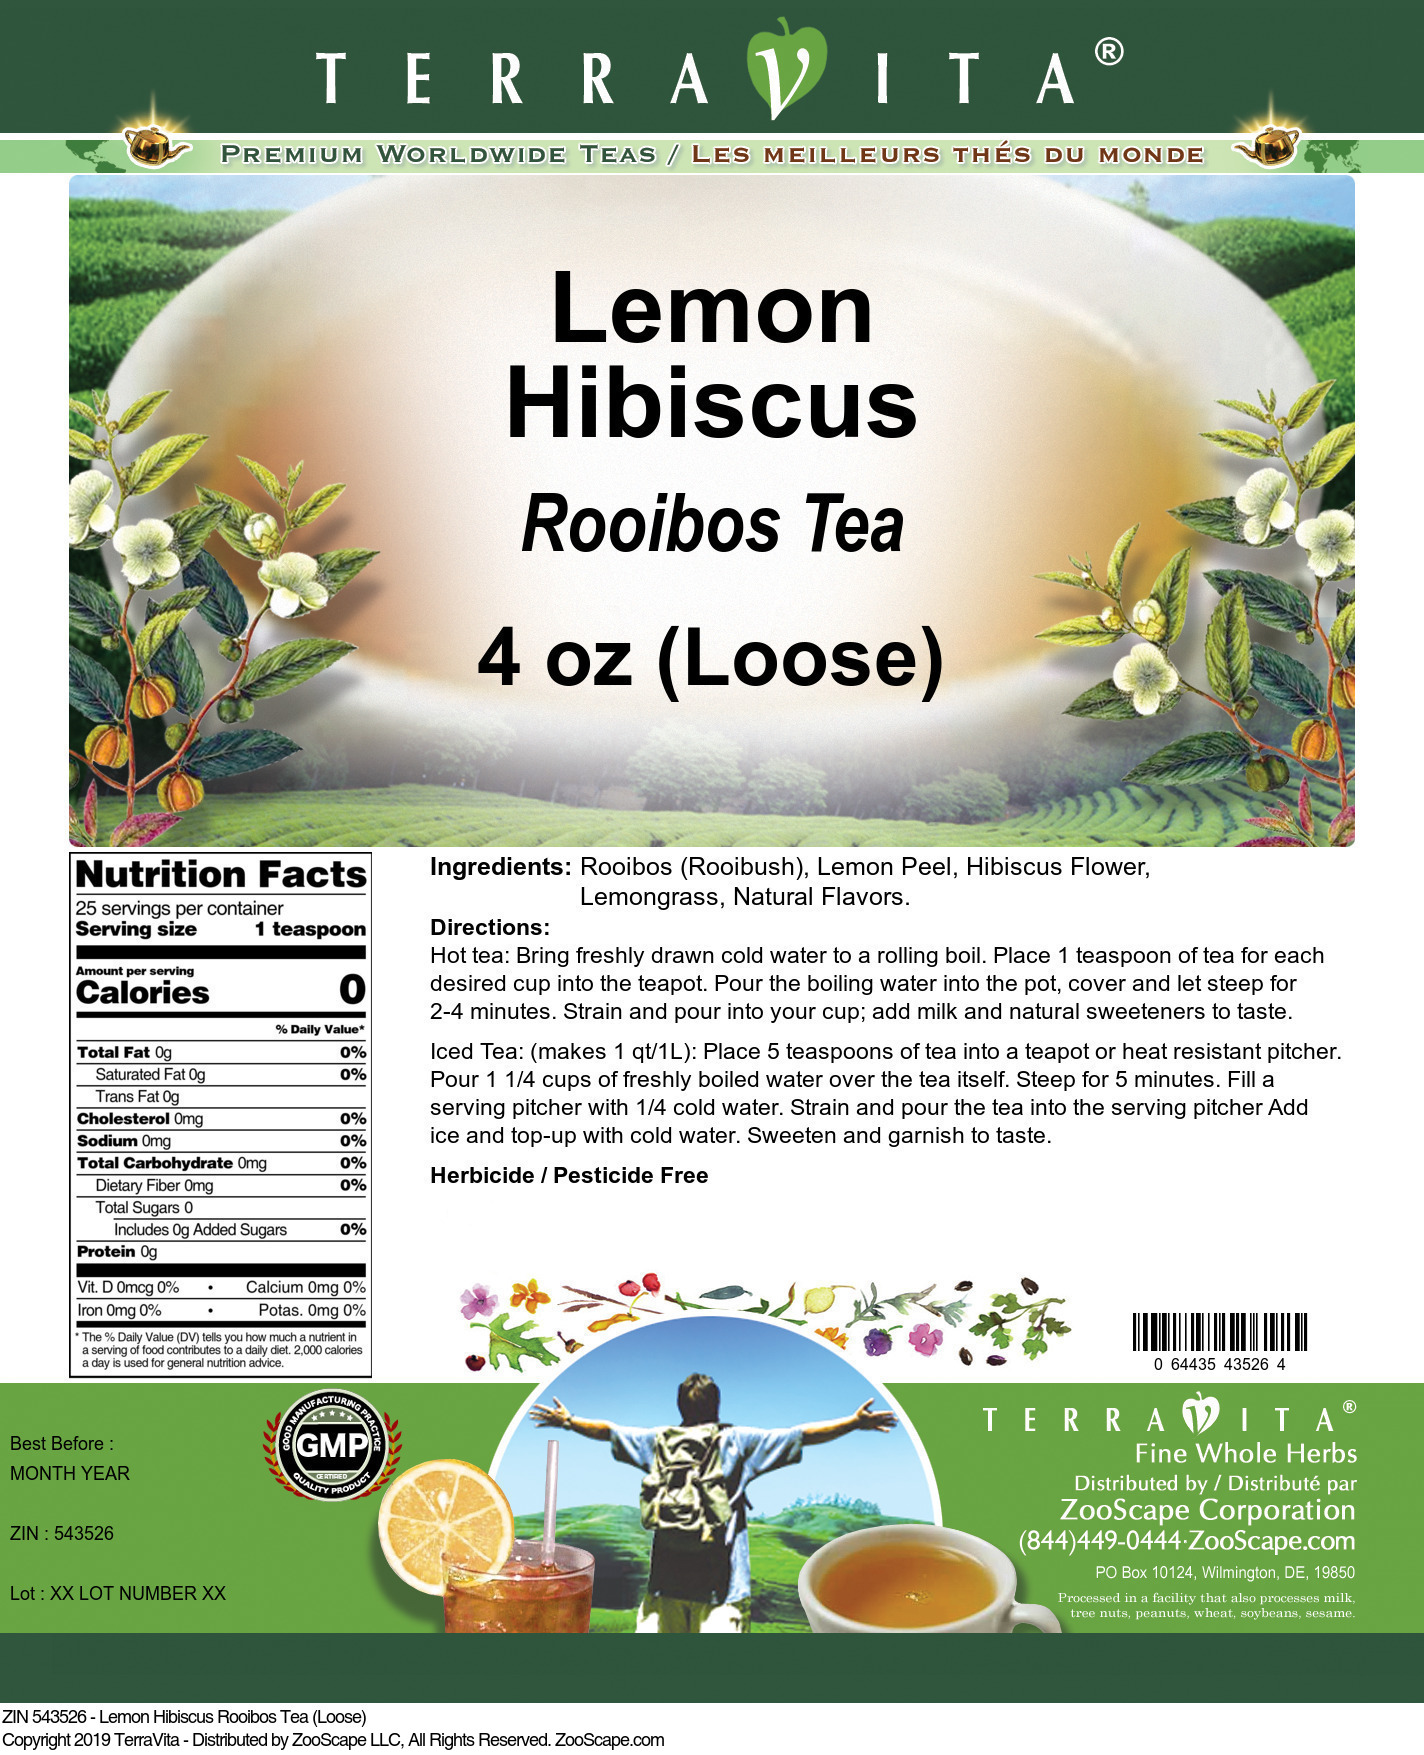 Lemon Hibiscus Rooibos Tea (Loose) - Label